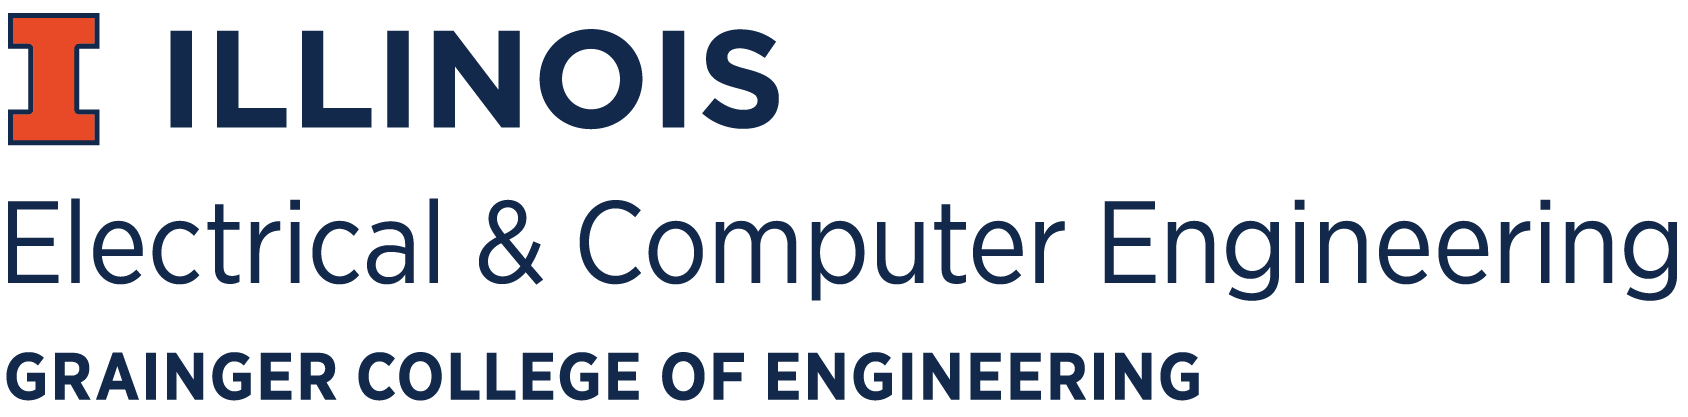 University of Illinois, Electrical & Computer Engineering